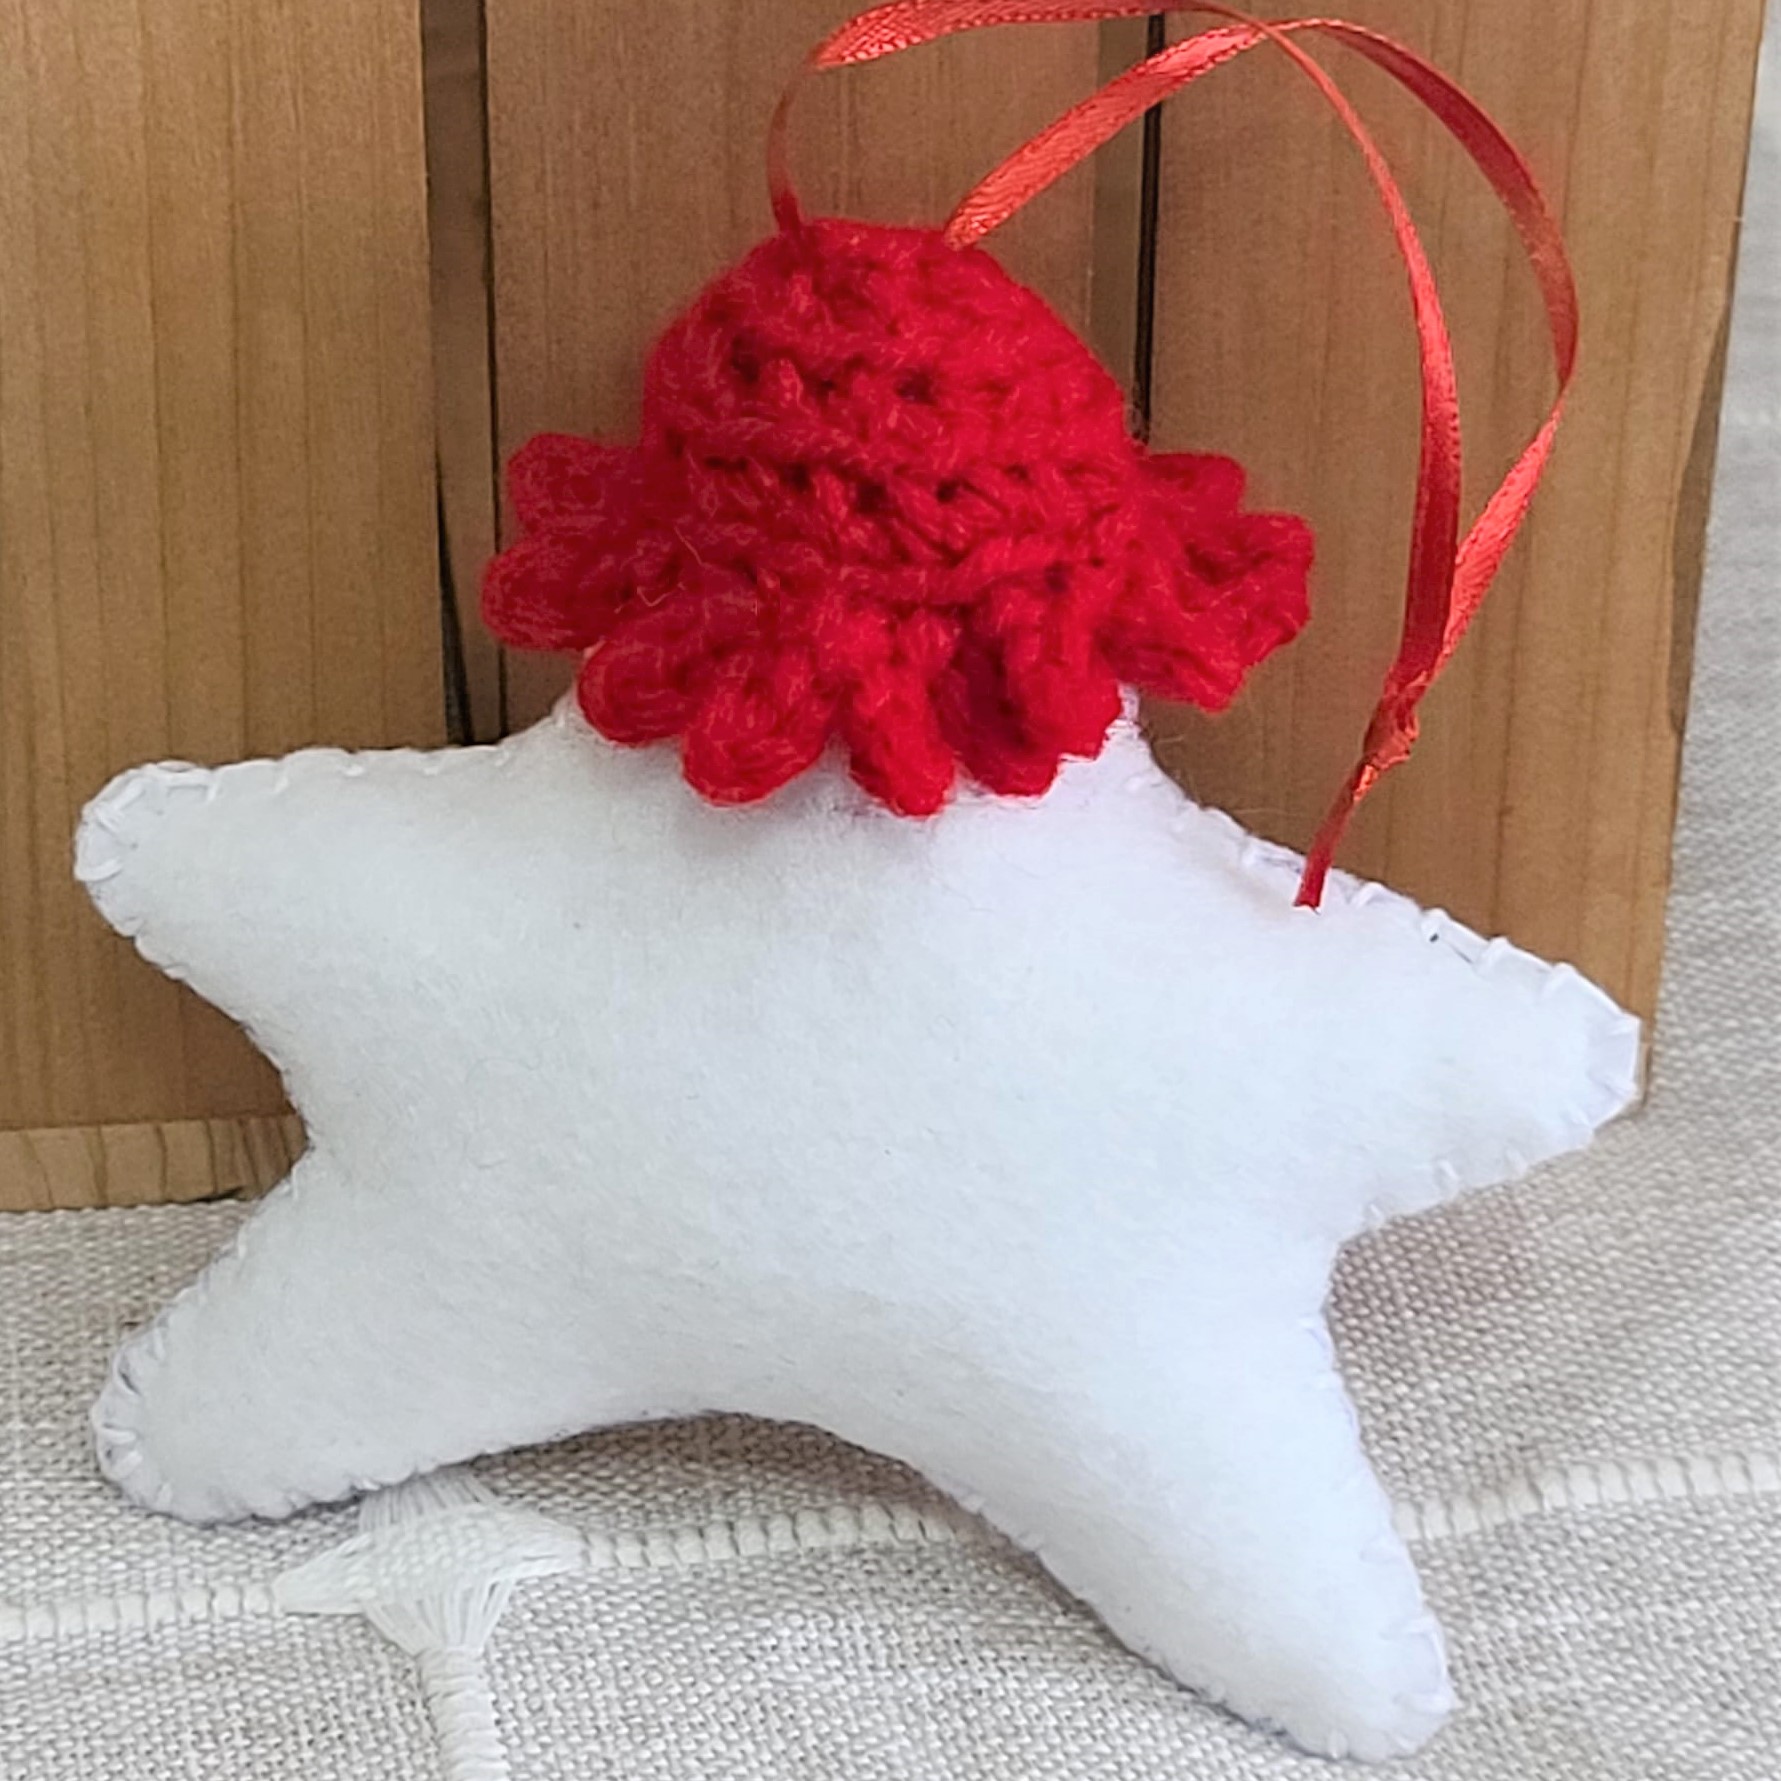 Felt Snowman star ornament with crochet hat - red hat